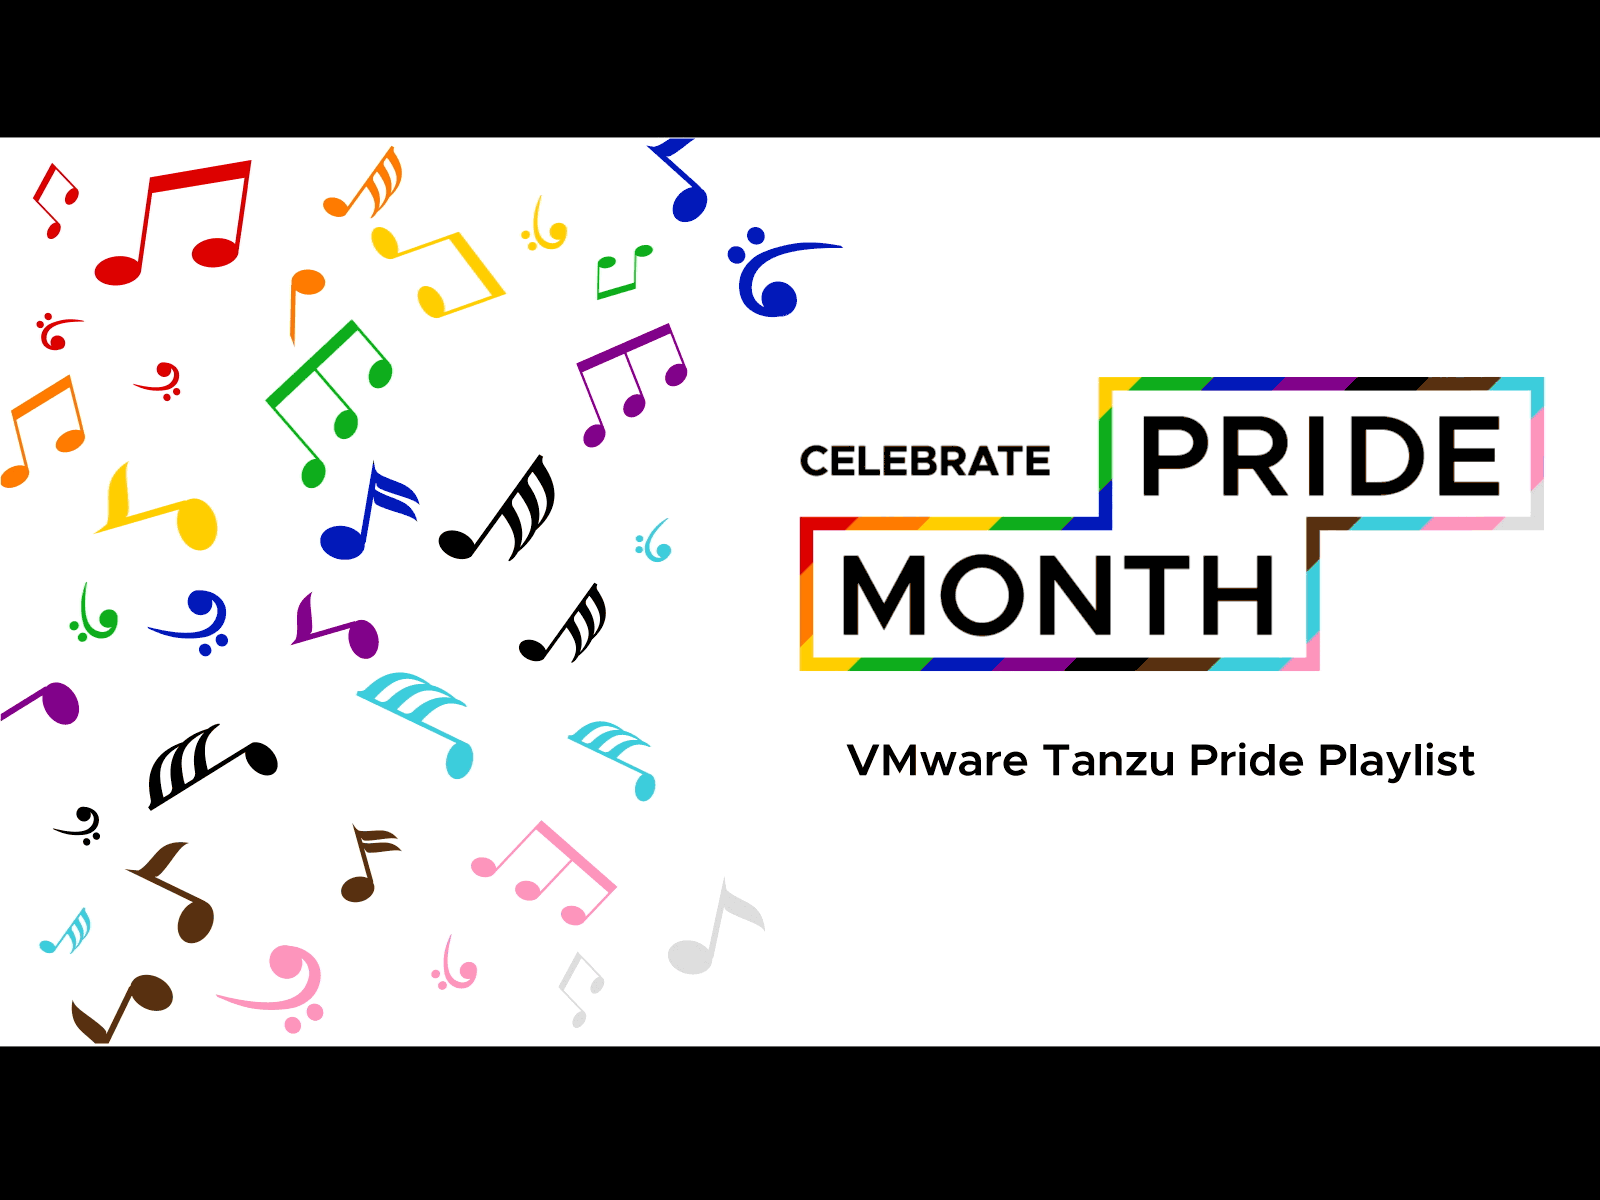 Happy Pride Month! (VMware Tanzu Pride Playlist) by Amy Erickson on